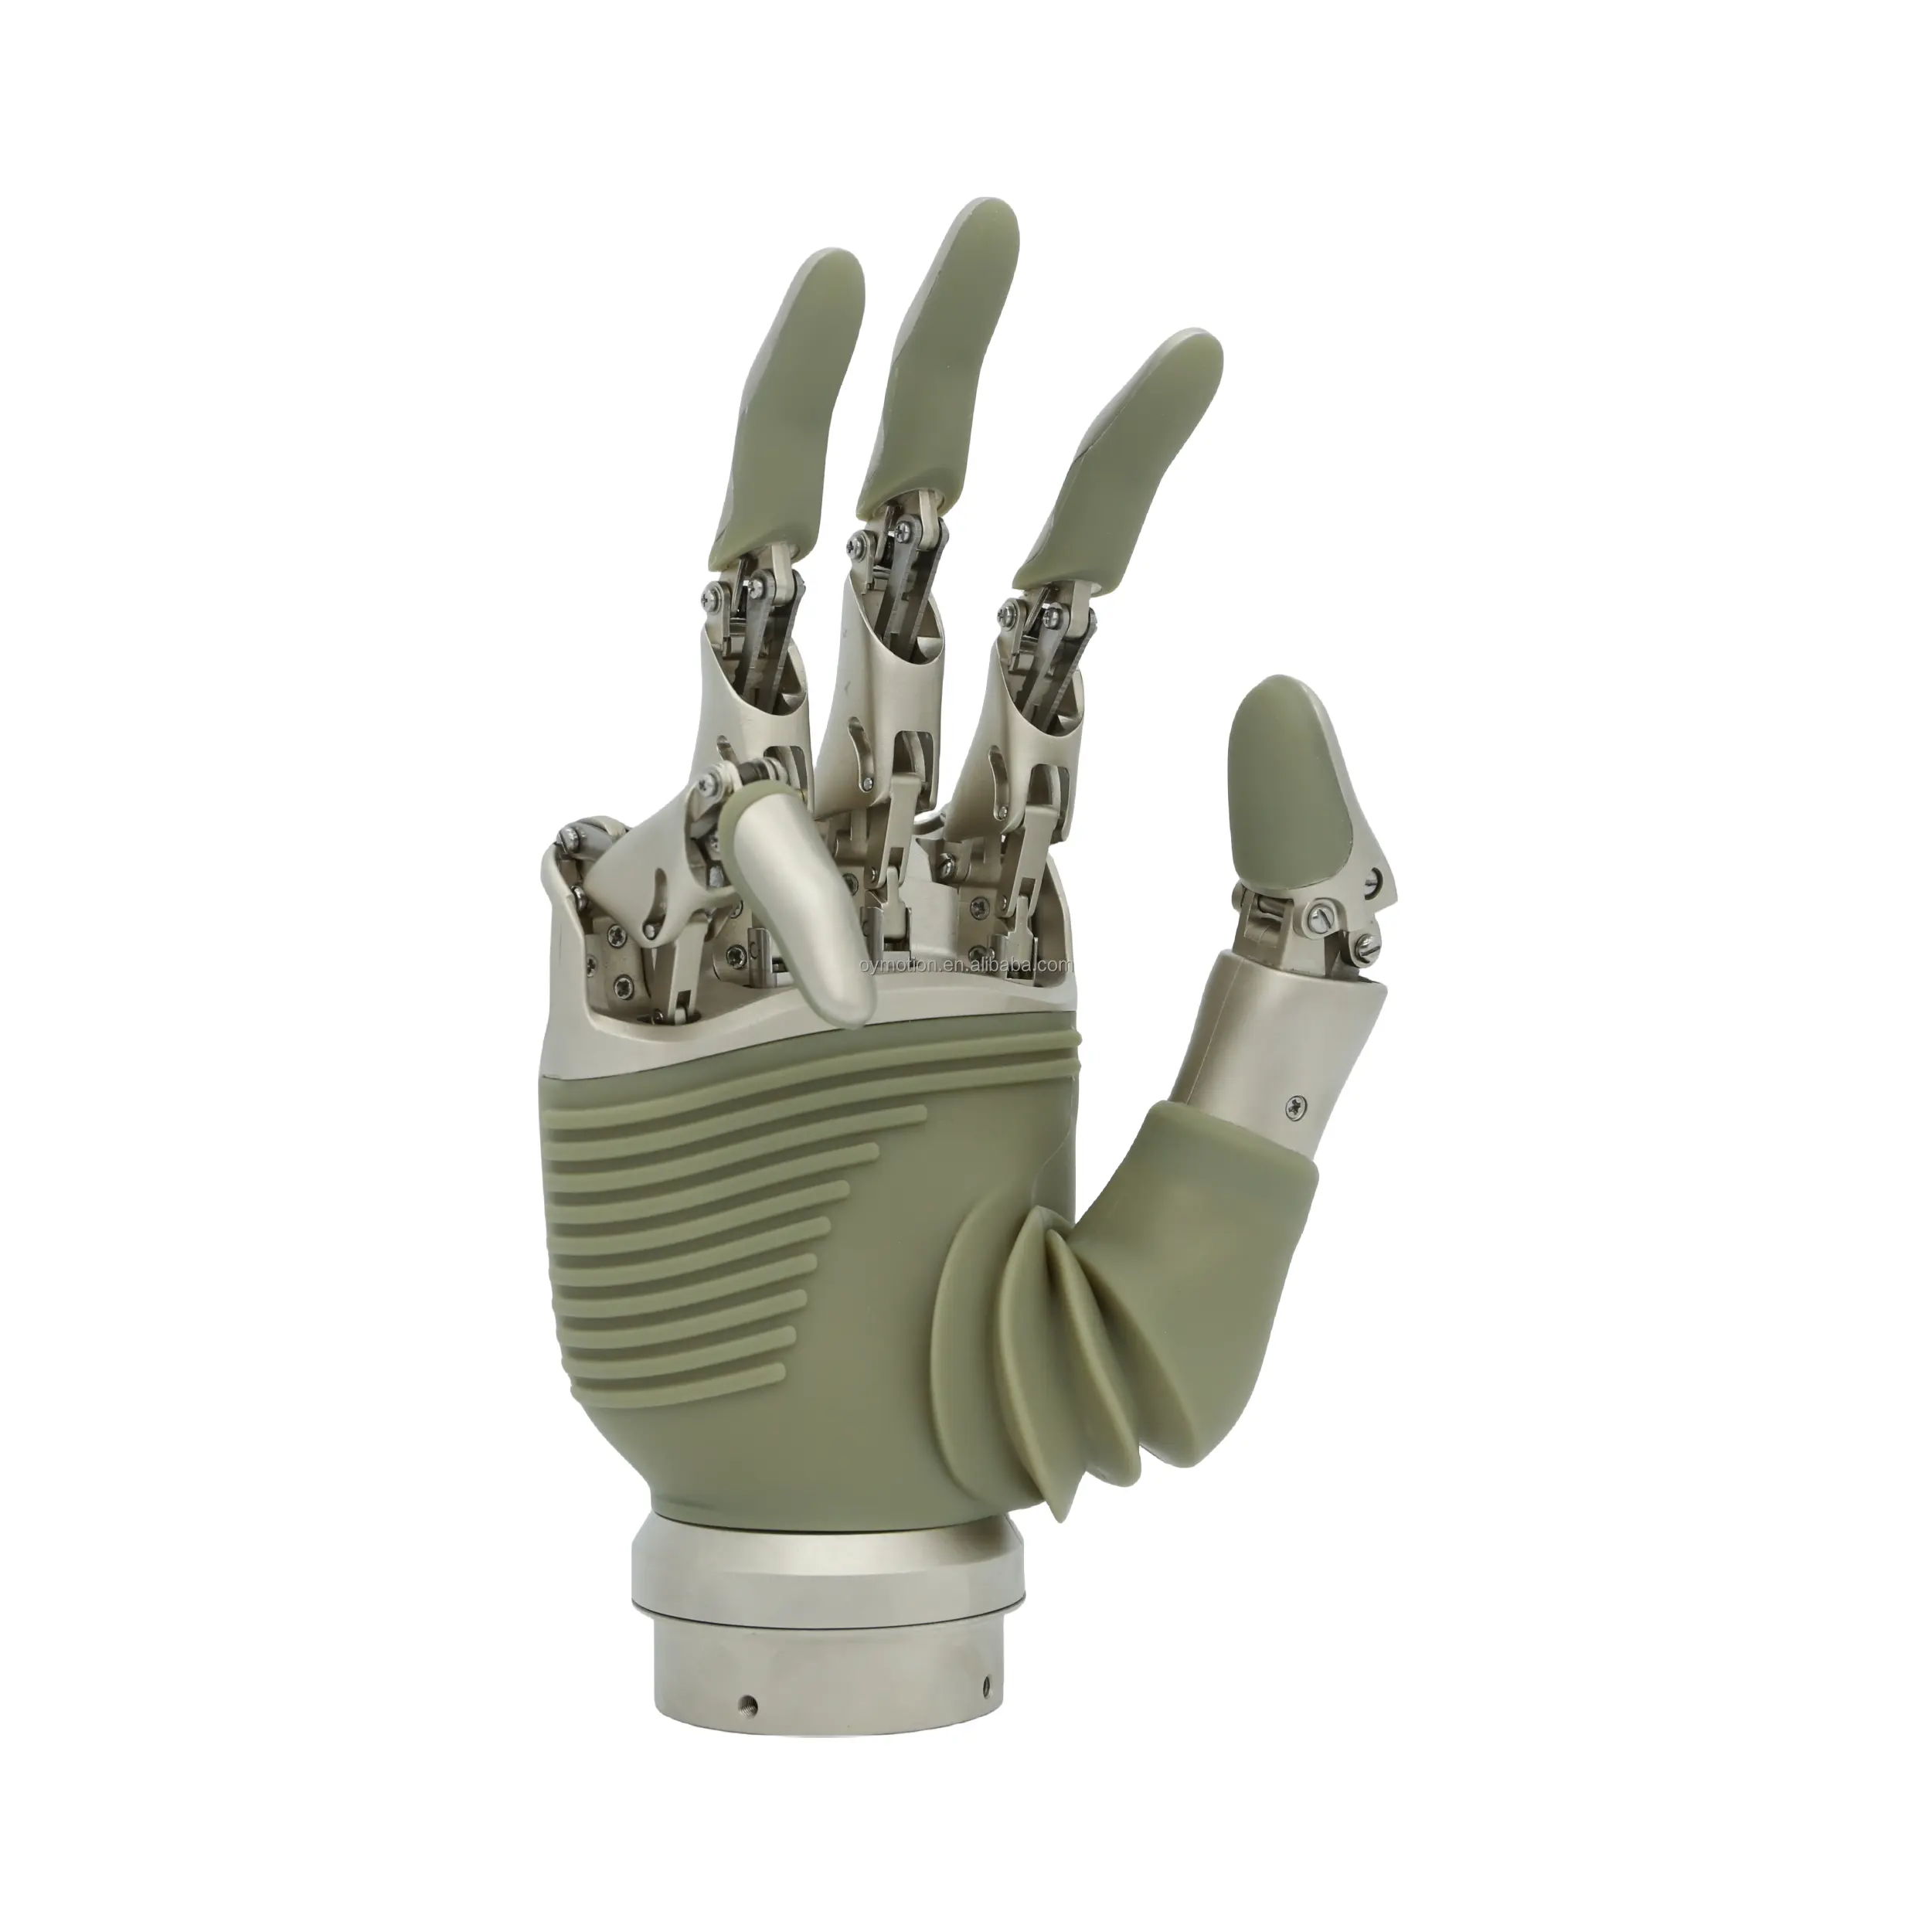 OYMOTION OHand Pro 8 canales mano biónica inteligente (antebrazo) extremidades artificiales mano protésica